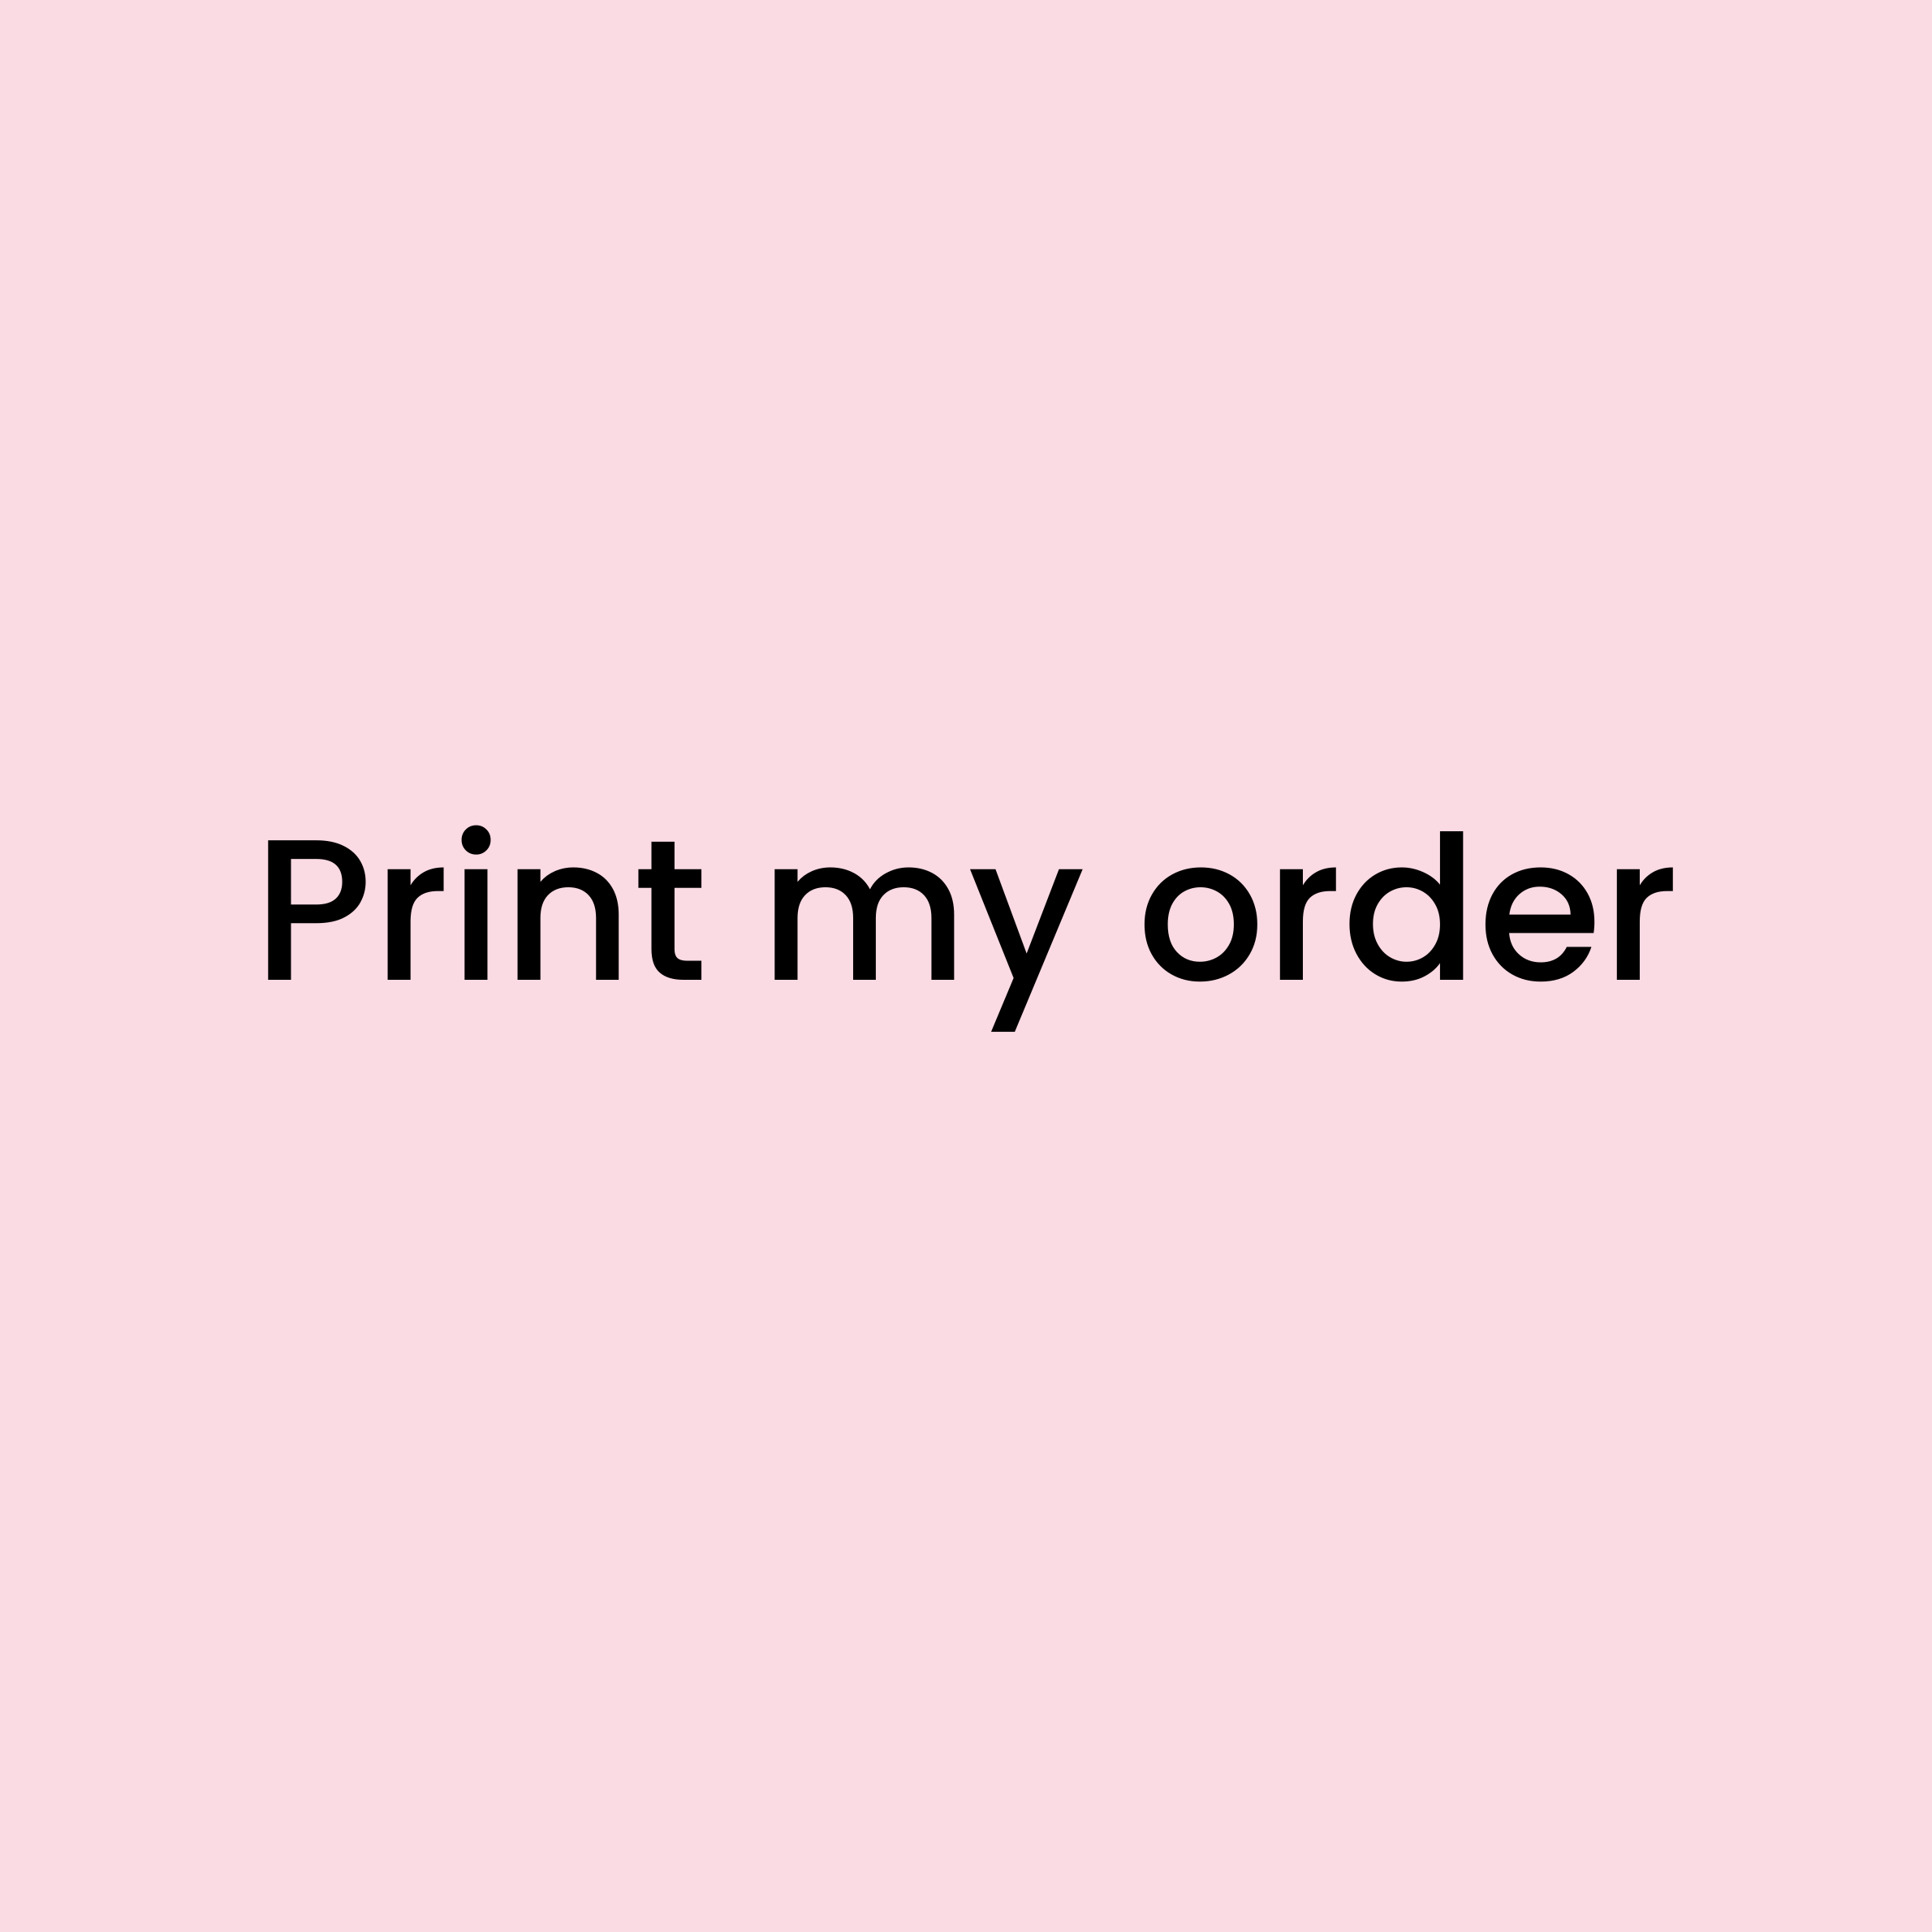 Print my order - 100 cards